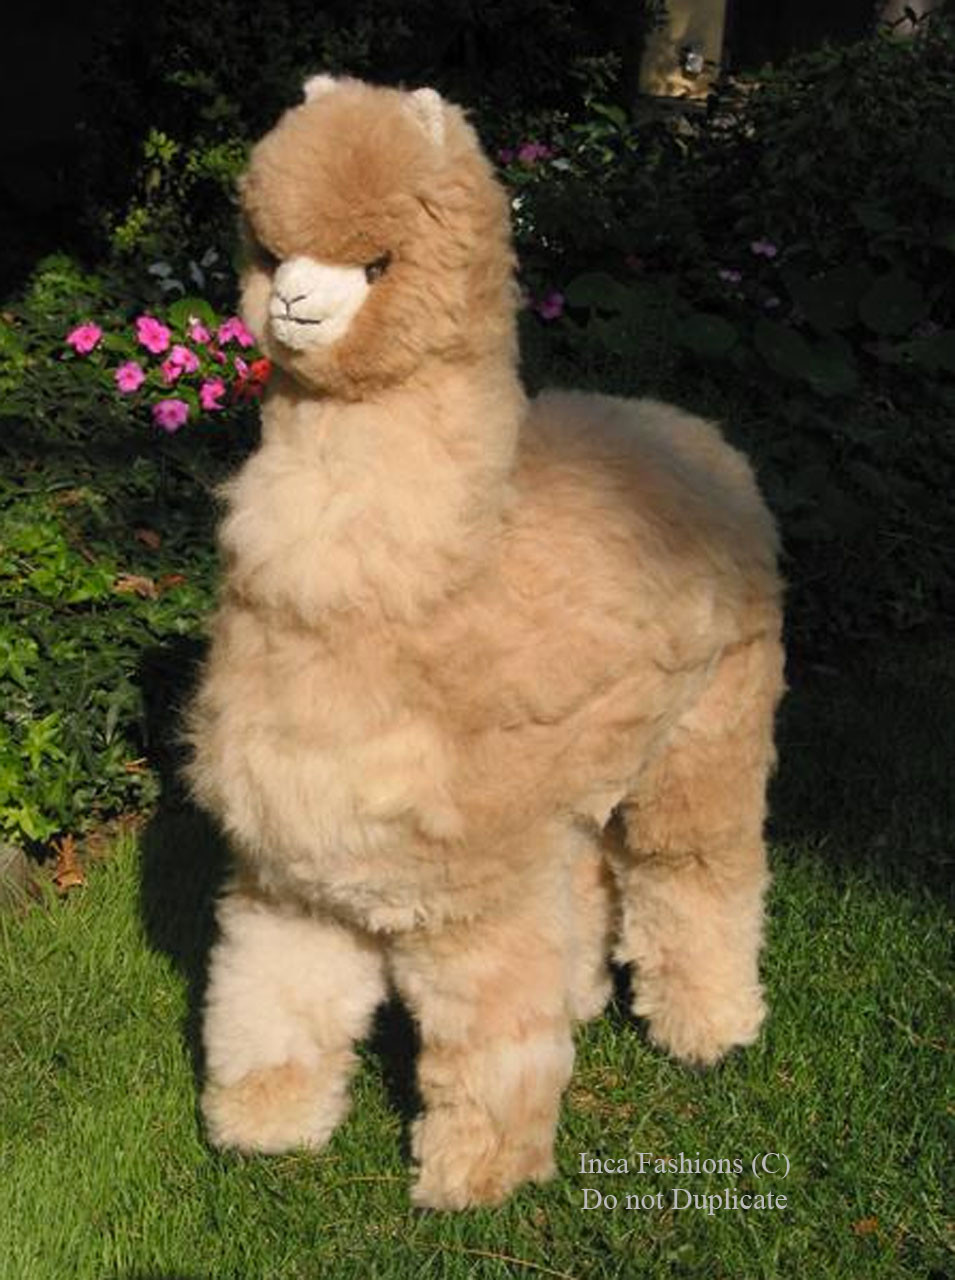 life size alpaca stuffed animal